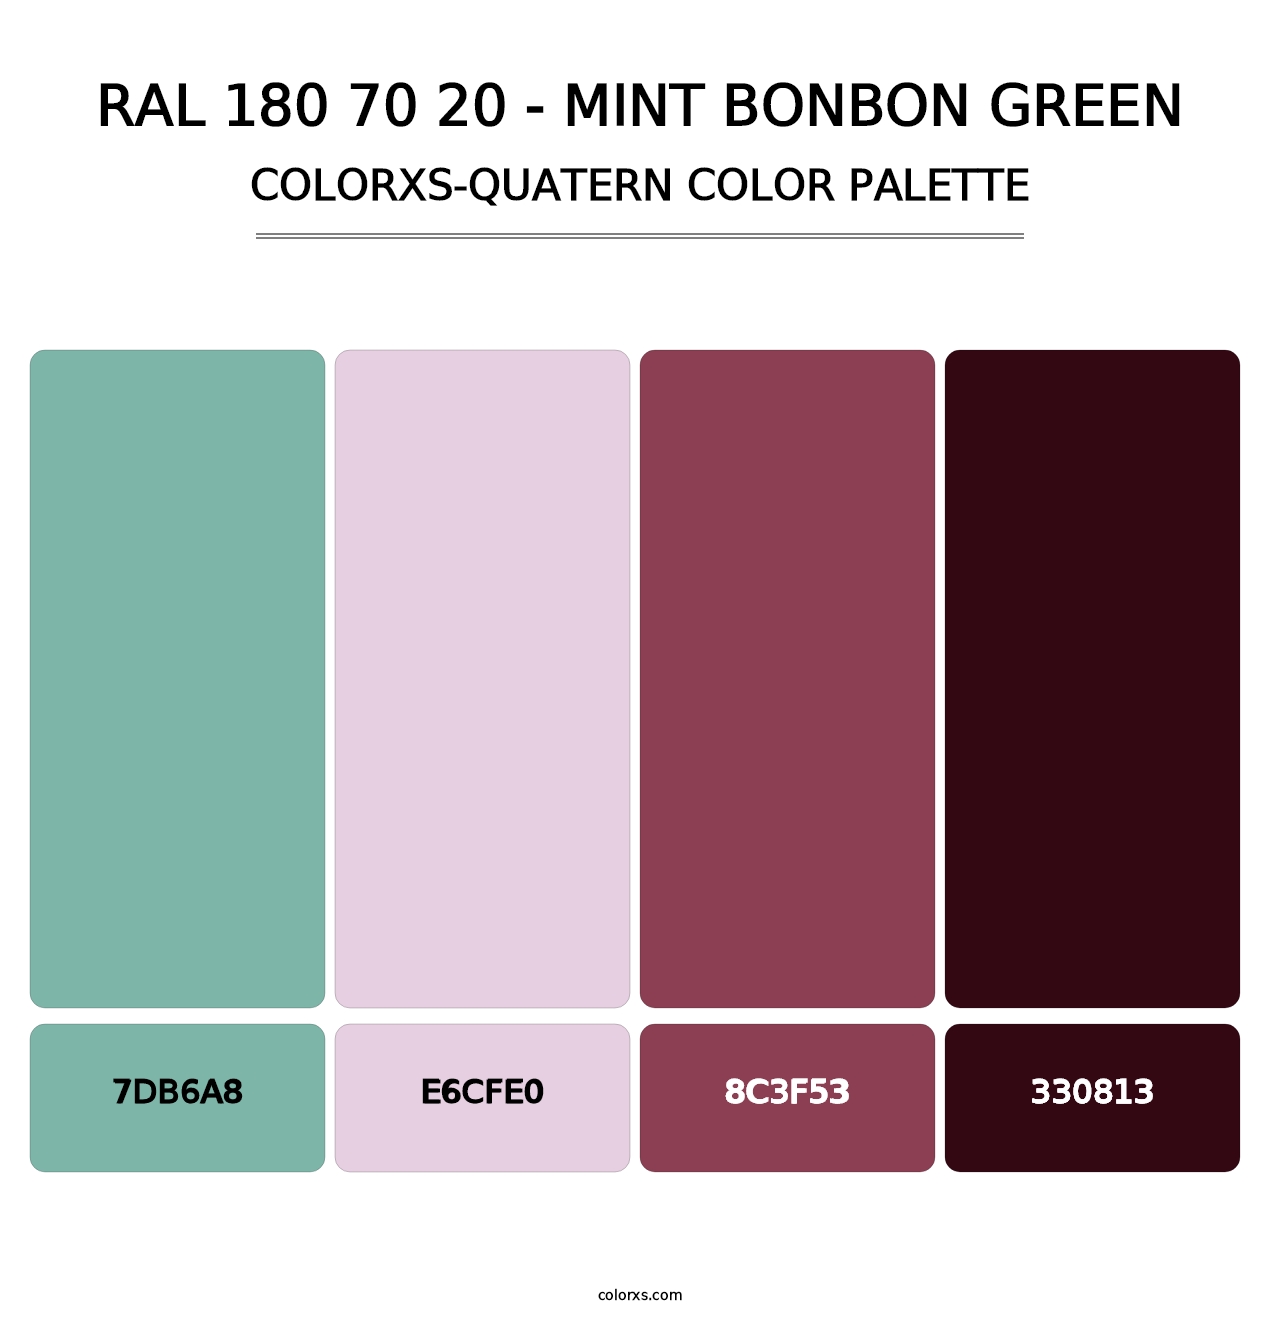 RAL 180 70 20 - Mint Bonbon Green - Colorxs Quatern Palette